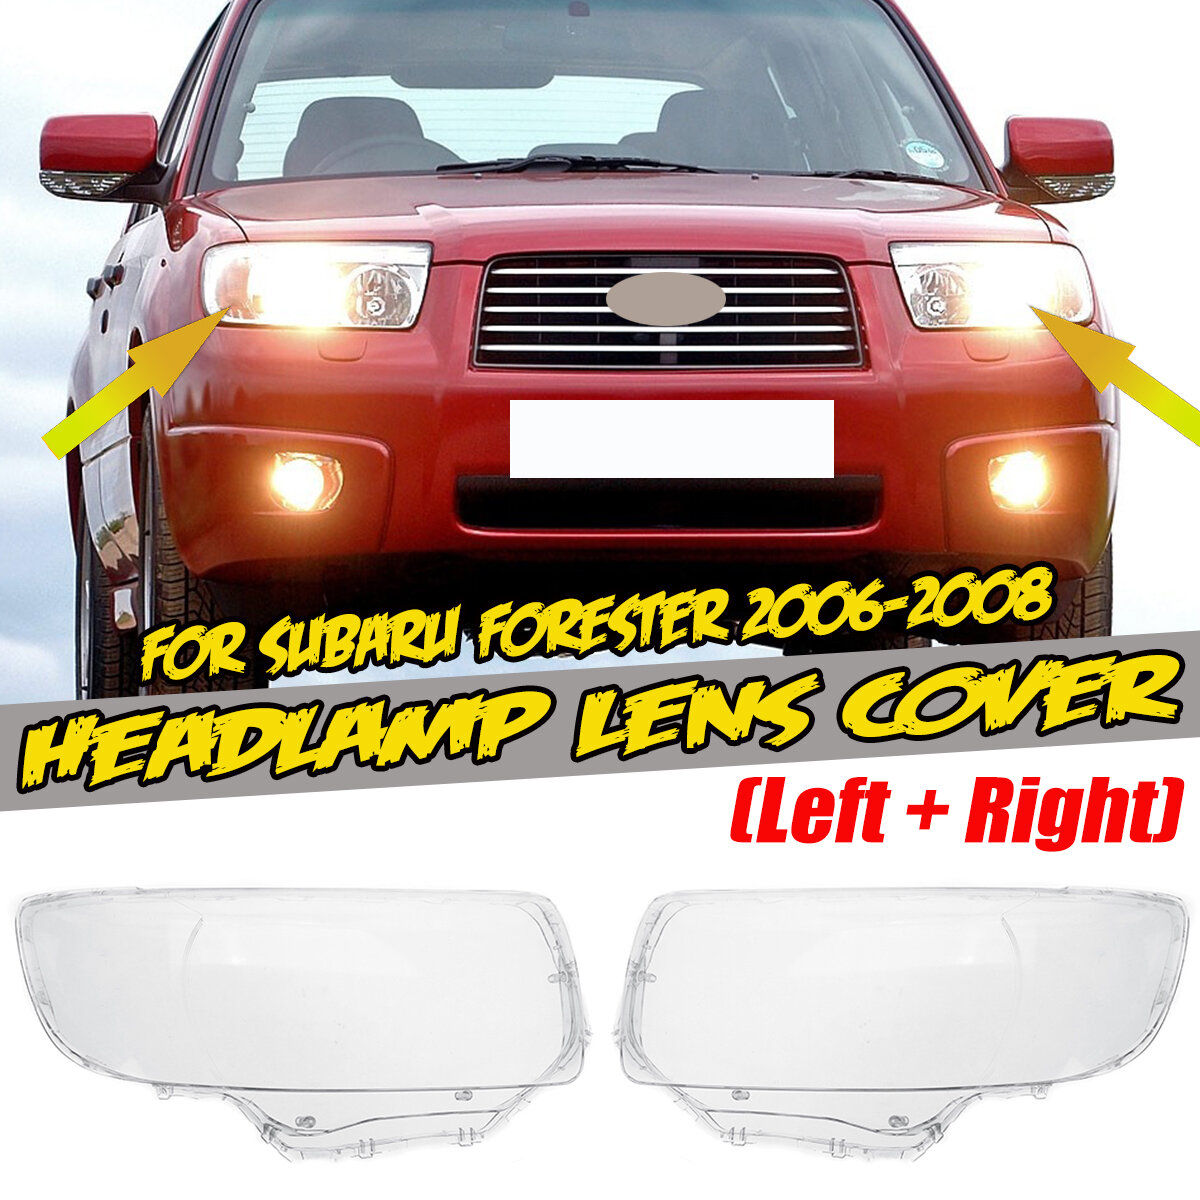 For Subaru Forester 2006-2008 Headlight Headlamp Lens Cover (Left+Right)